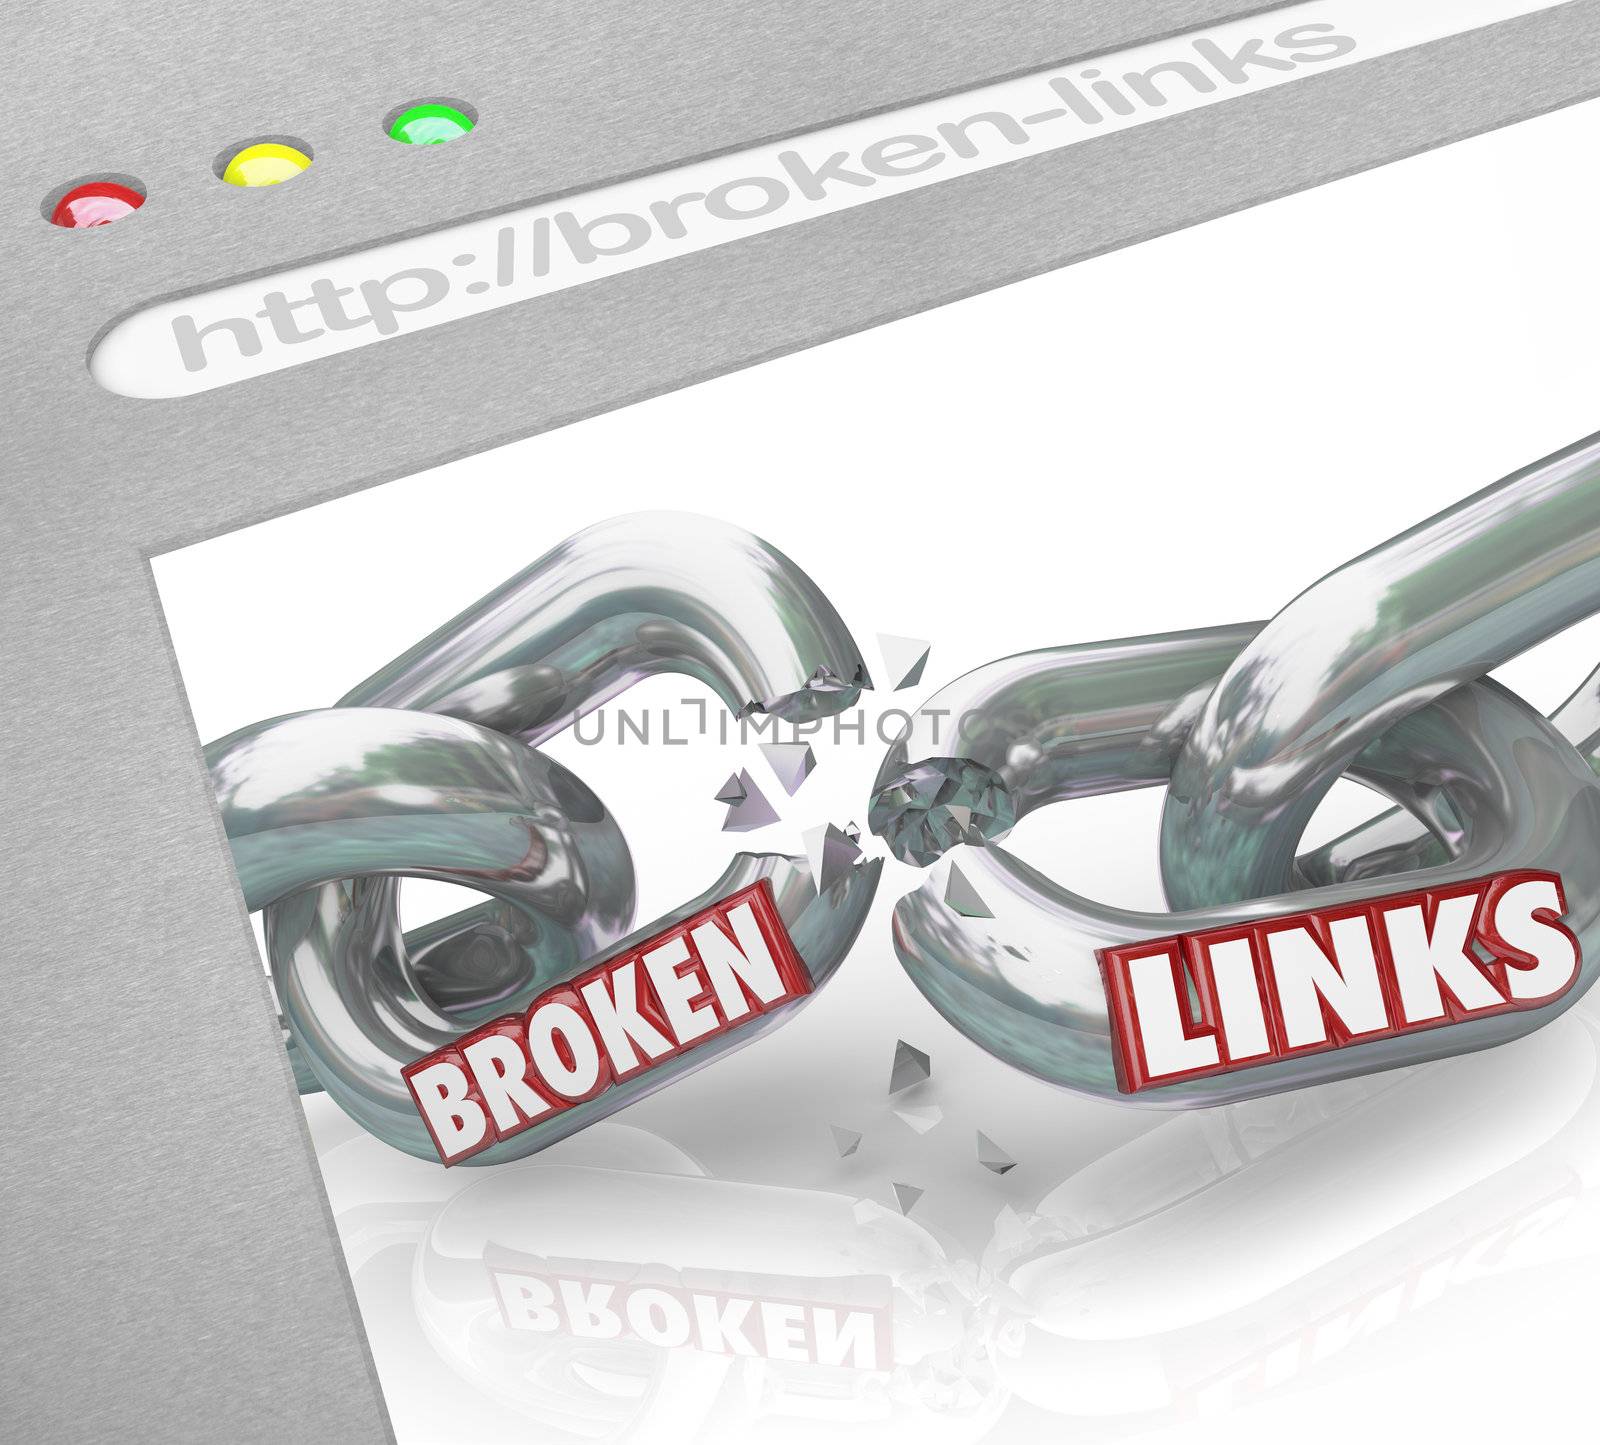 Bad Broken Links Website Screen Chain Connections by iQoncept